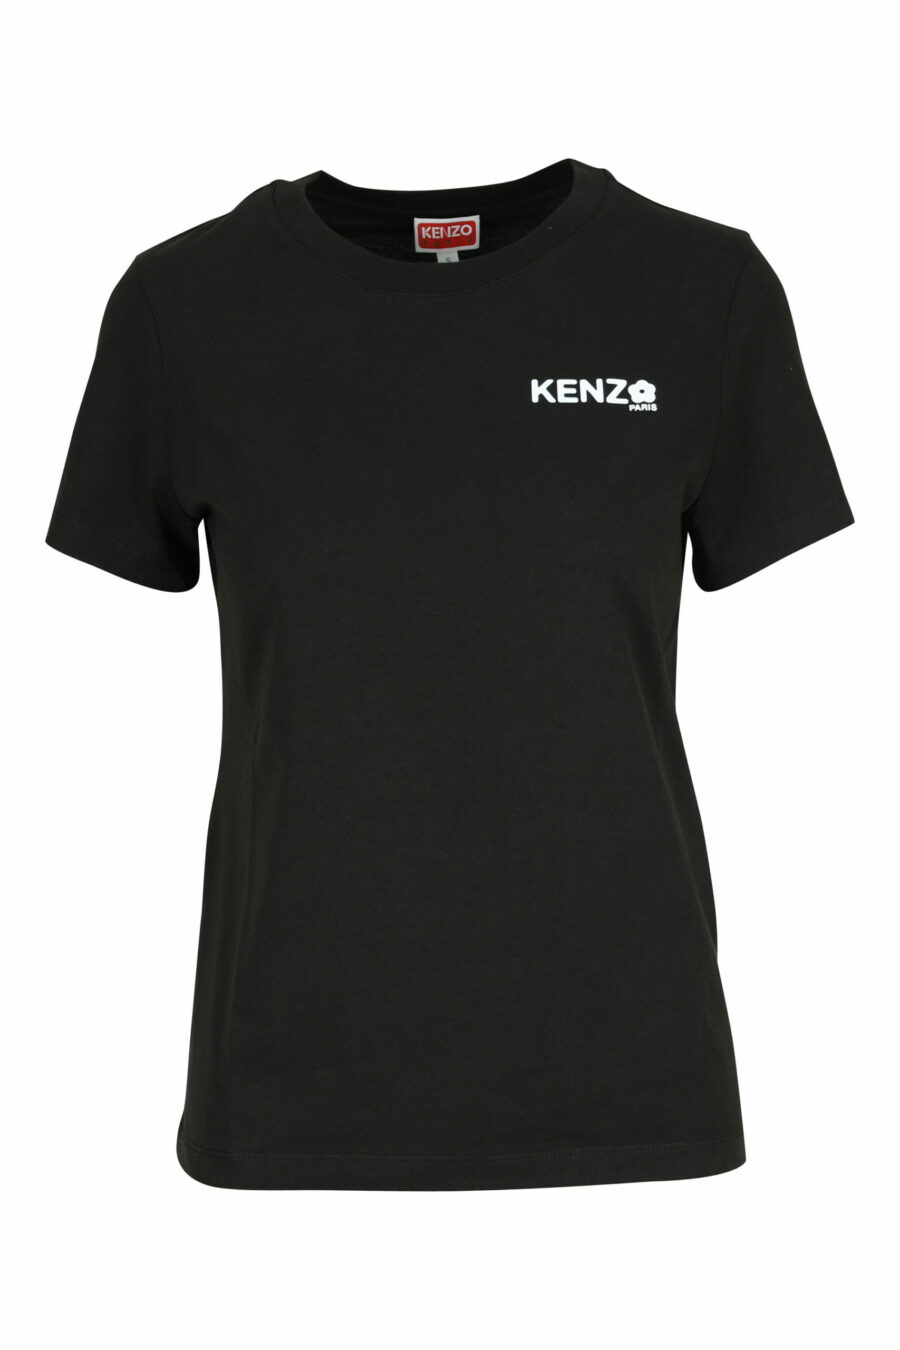 Camiseta negra con minilogo "kenzo boke flower" blanco - 3612230587762 scaled